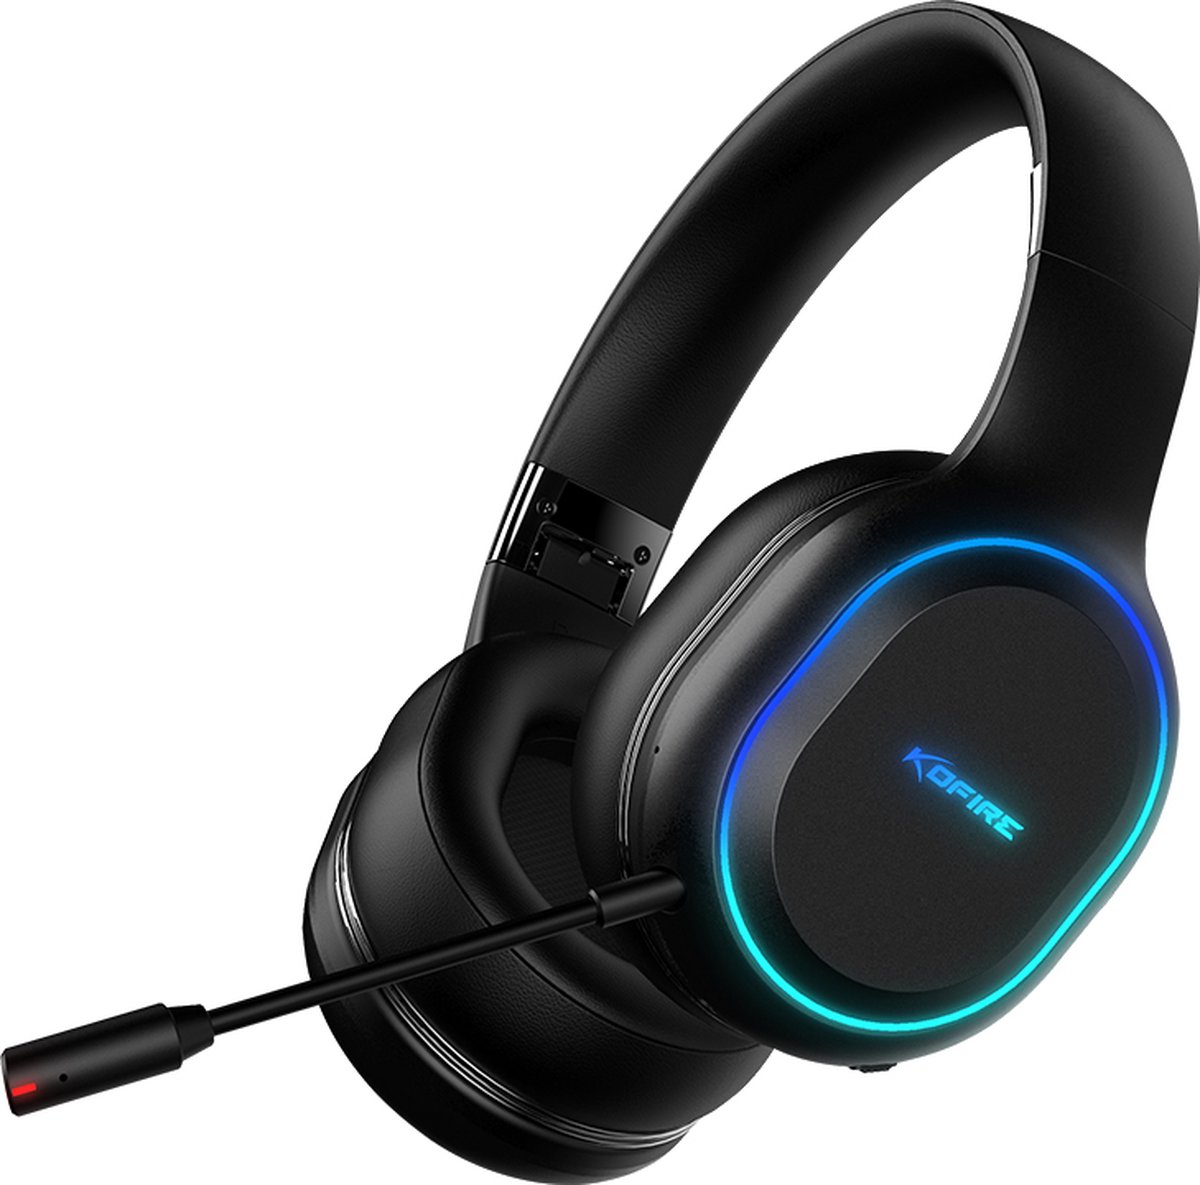 Kofire BG-05 Draadloze Gaming Headset - Over-ear Bluetooth koptelefoon - met microfoon - Zwart